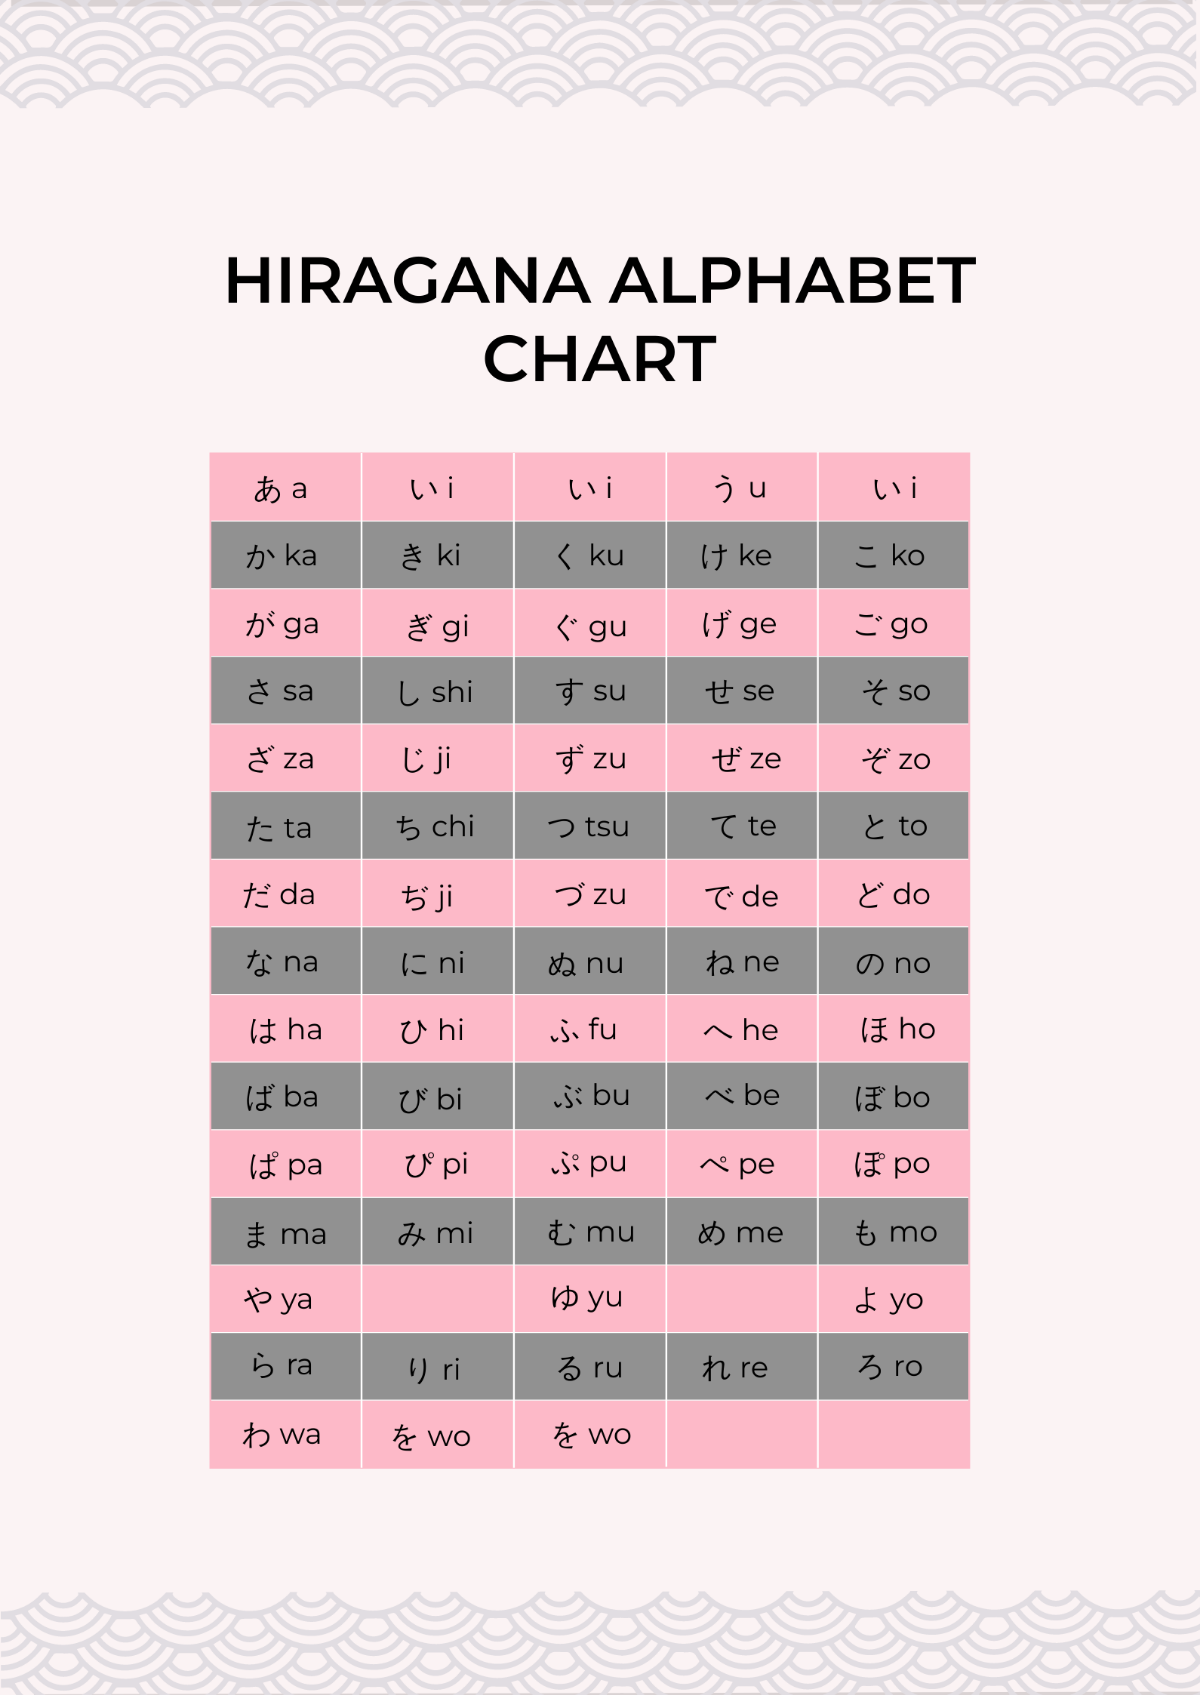 Hiragana Alphabet Chart Template